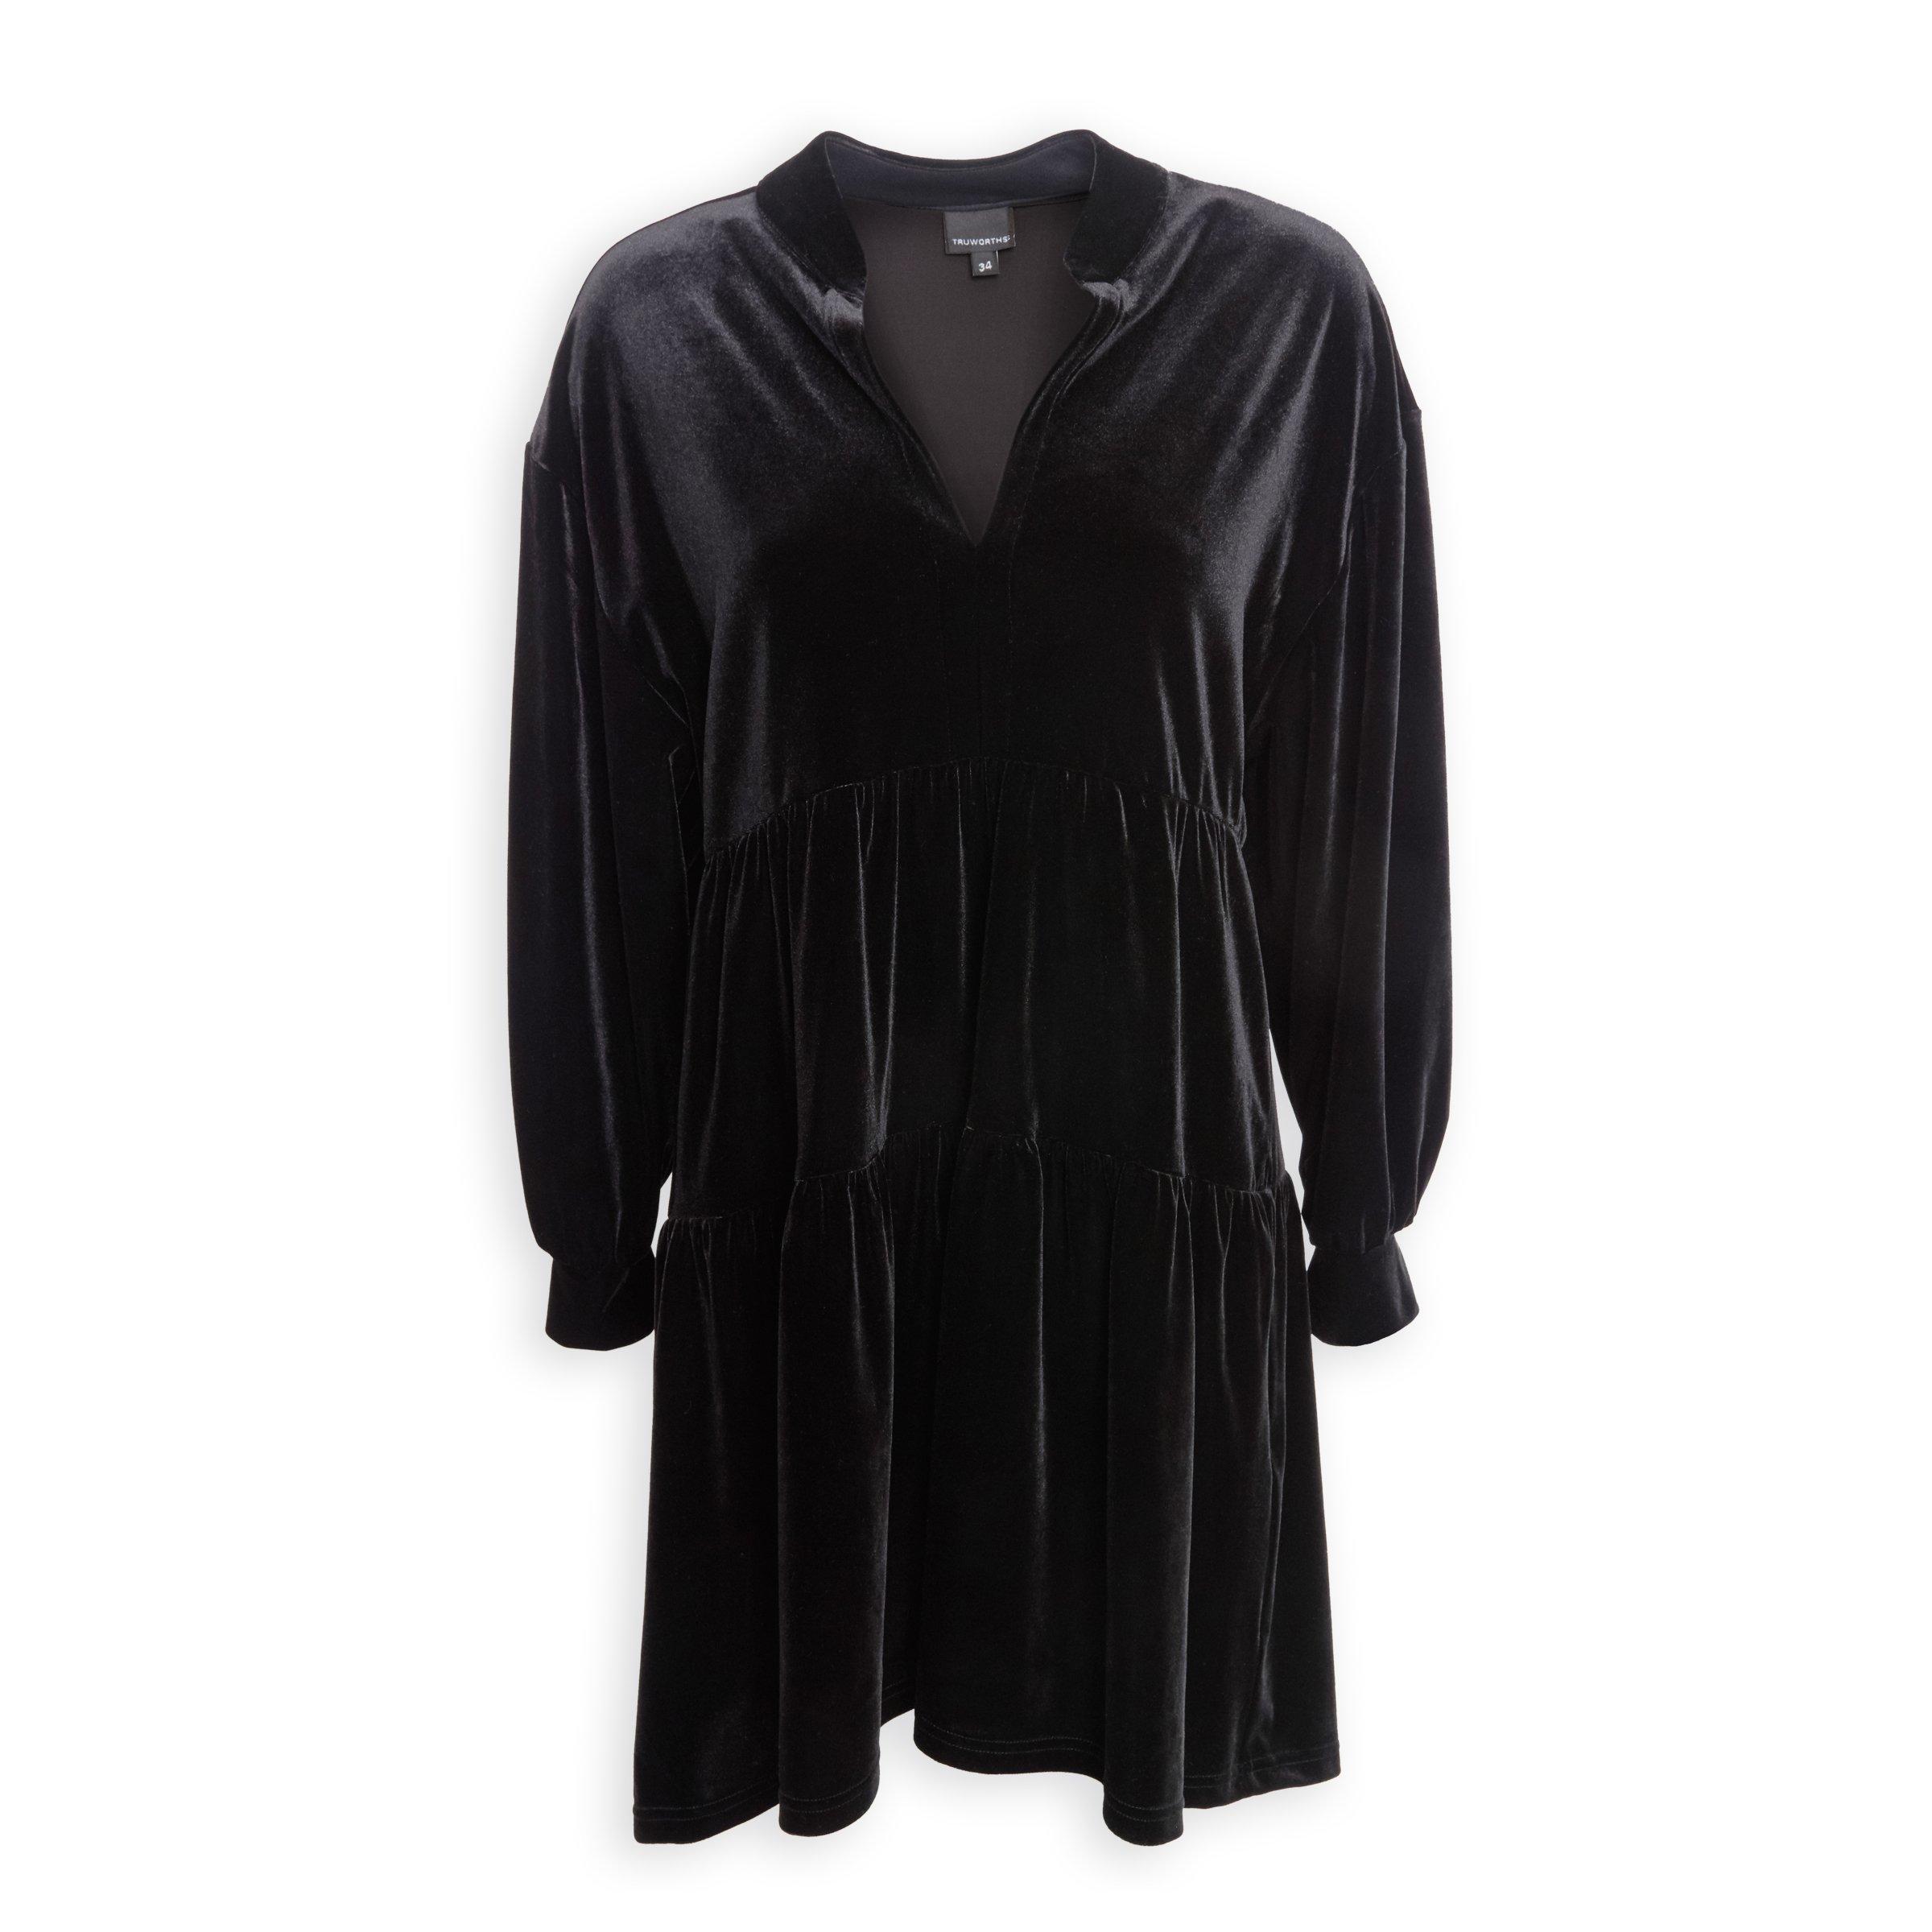 Buy Truworths Black Velour Tunic Dress Online | Truworths